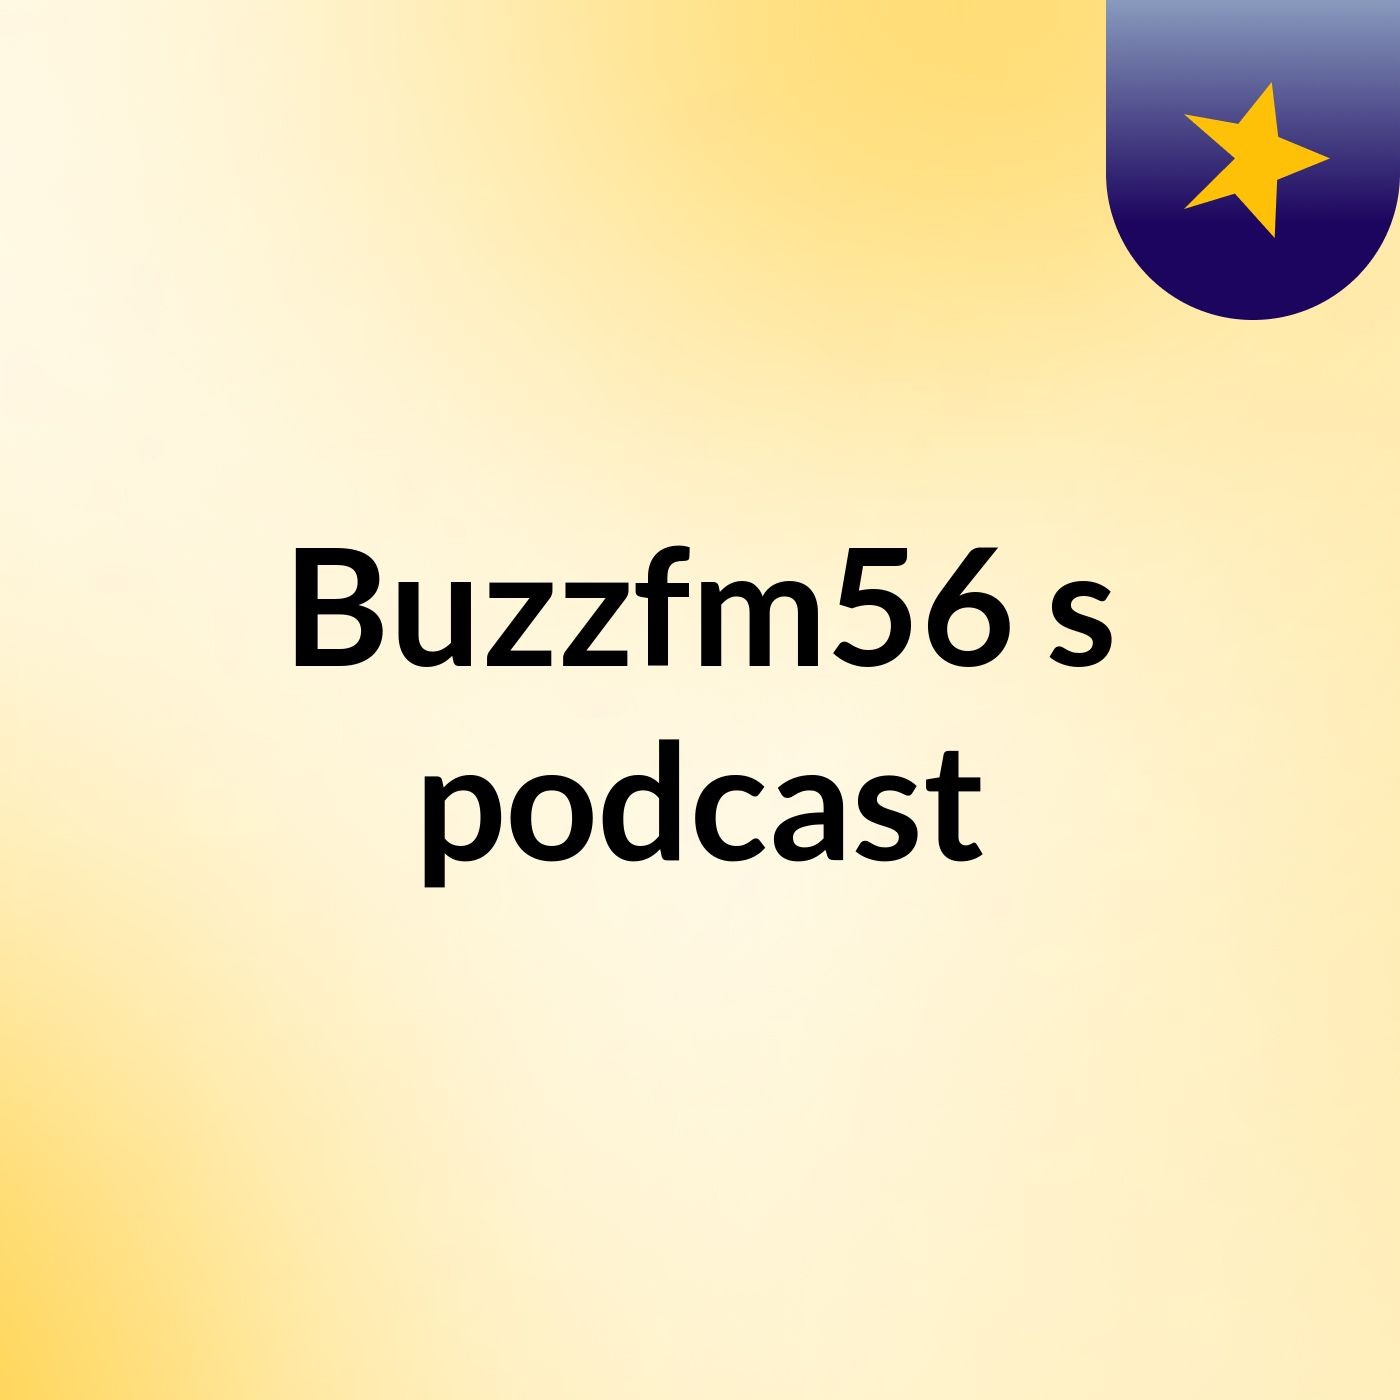 Episode 6 - Buzzfm56's podcast